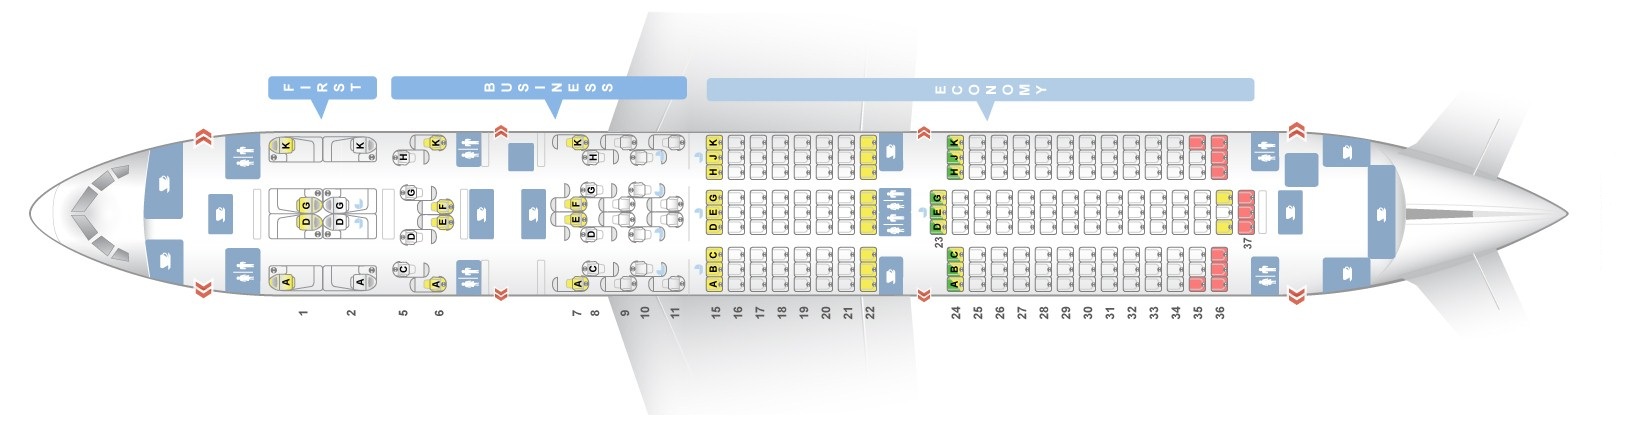 Seat Map Boeing Dreamliner Etihad Airways Best Seats In The Plane